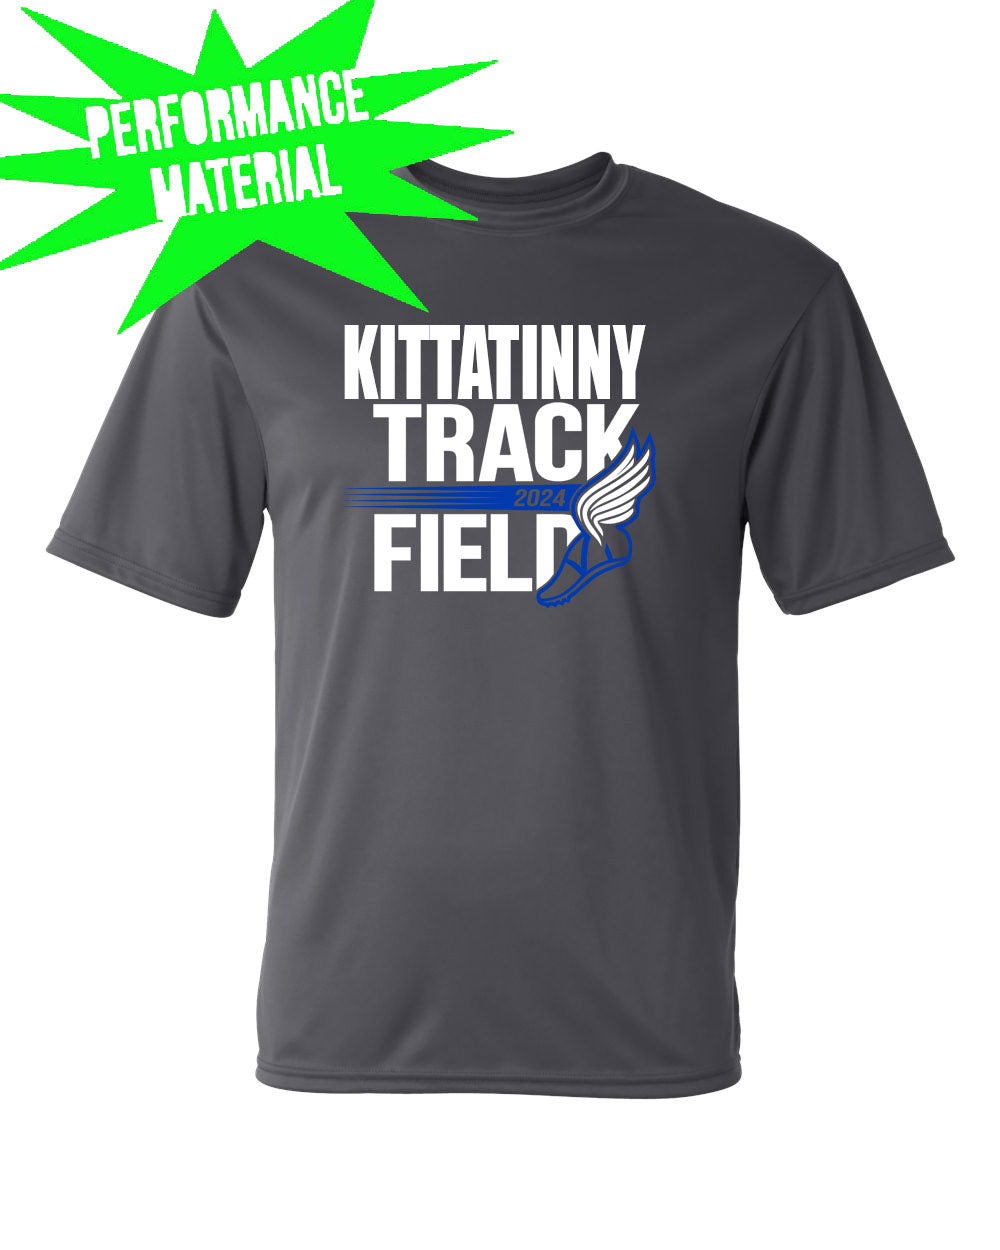 Kittatinny Track Performance Material design 6 T-Shirt